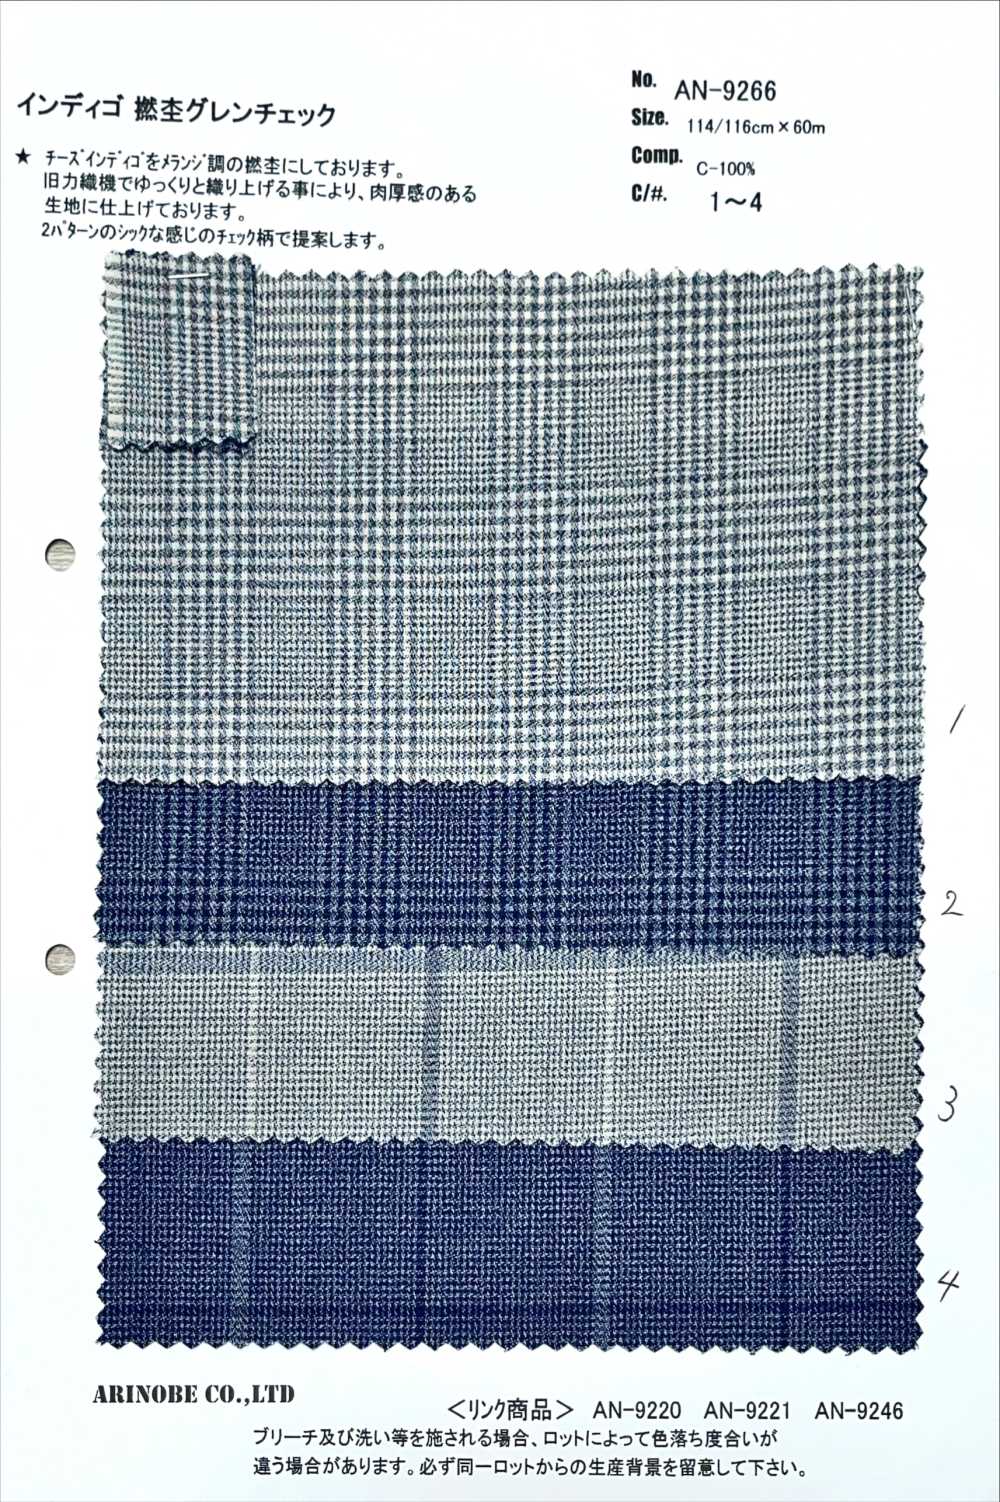 AN-9266 Indigo Twisted Heather Prince Check[Fabrication De Textile] ARINOBE CO., LTD.